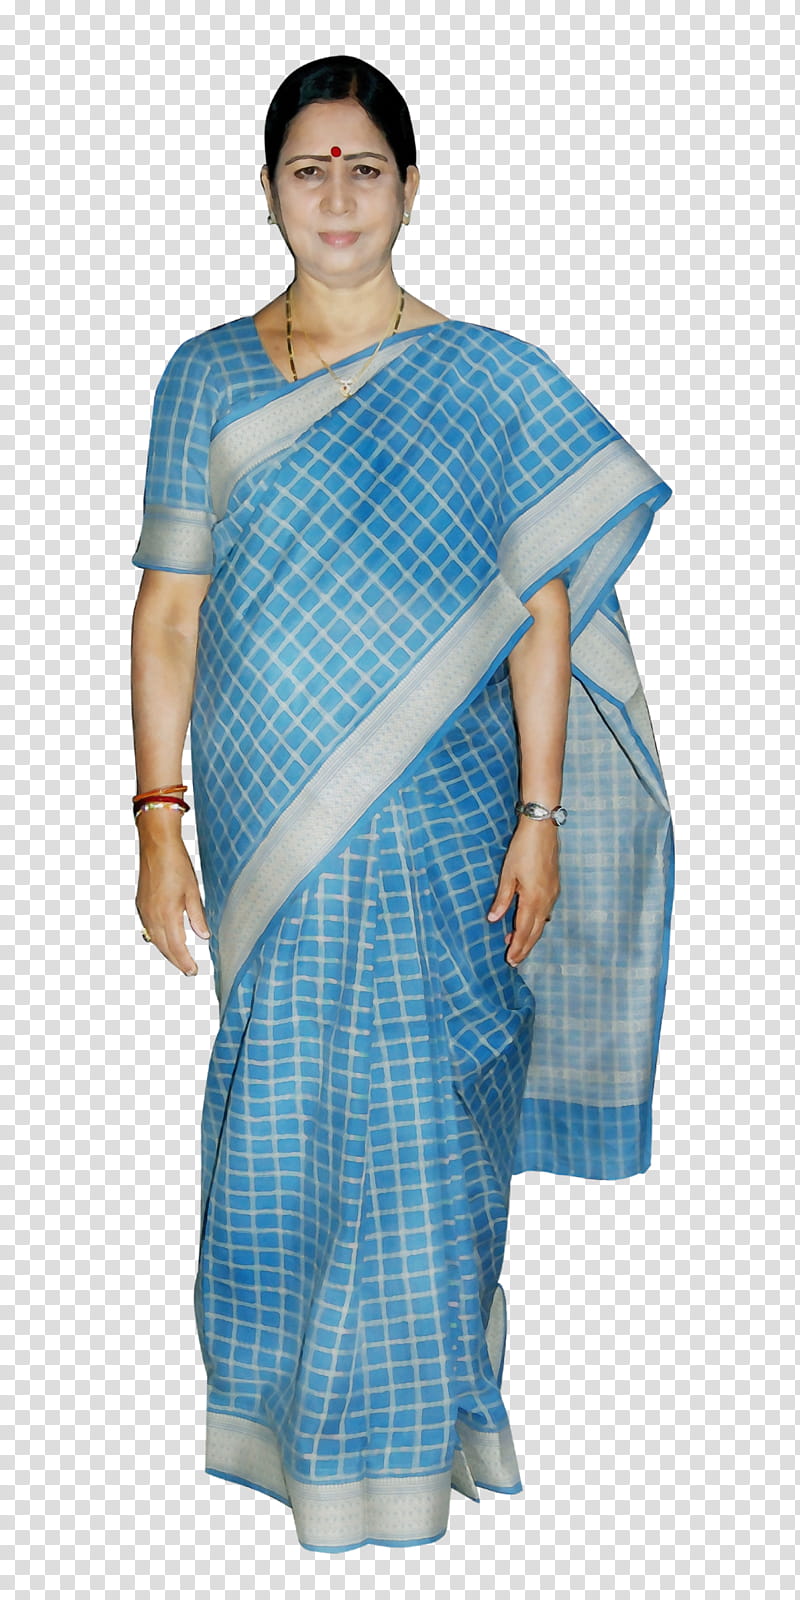 Hospital, Hospital Gowns, Silk, Costume, Shoulder, Sari, Clothing, Blue transparent background PNG clipart